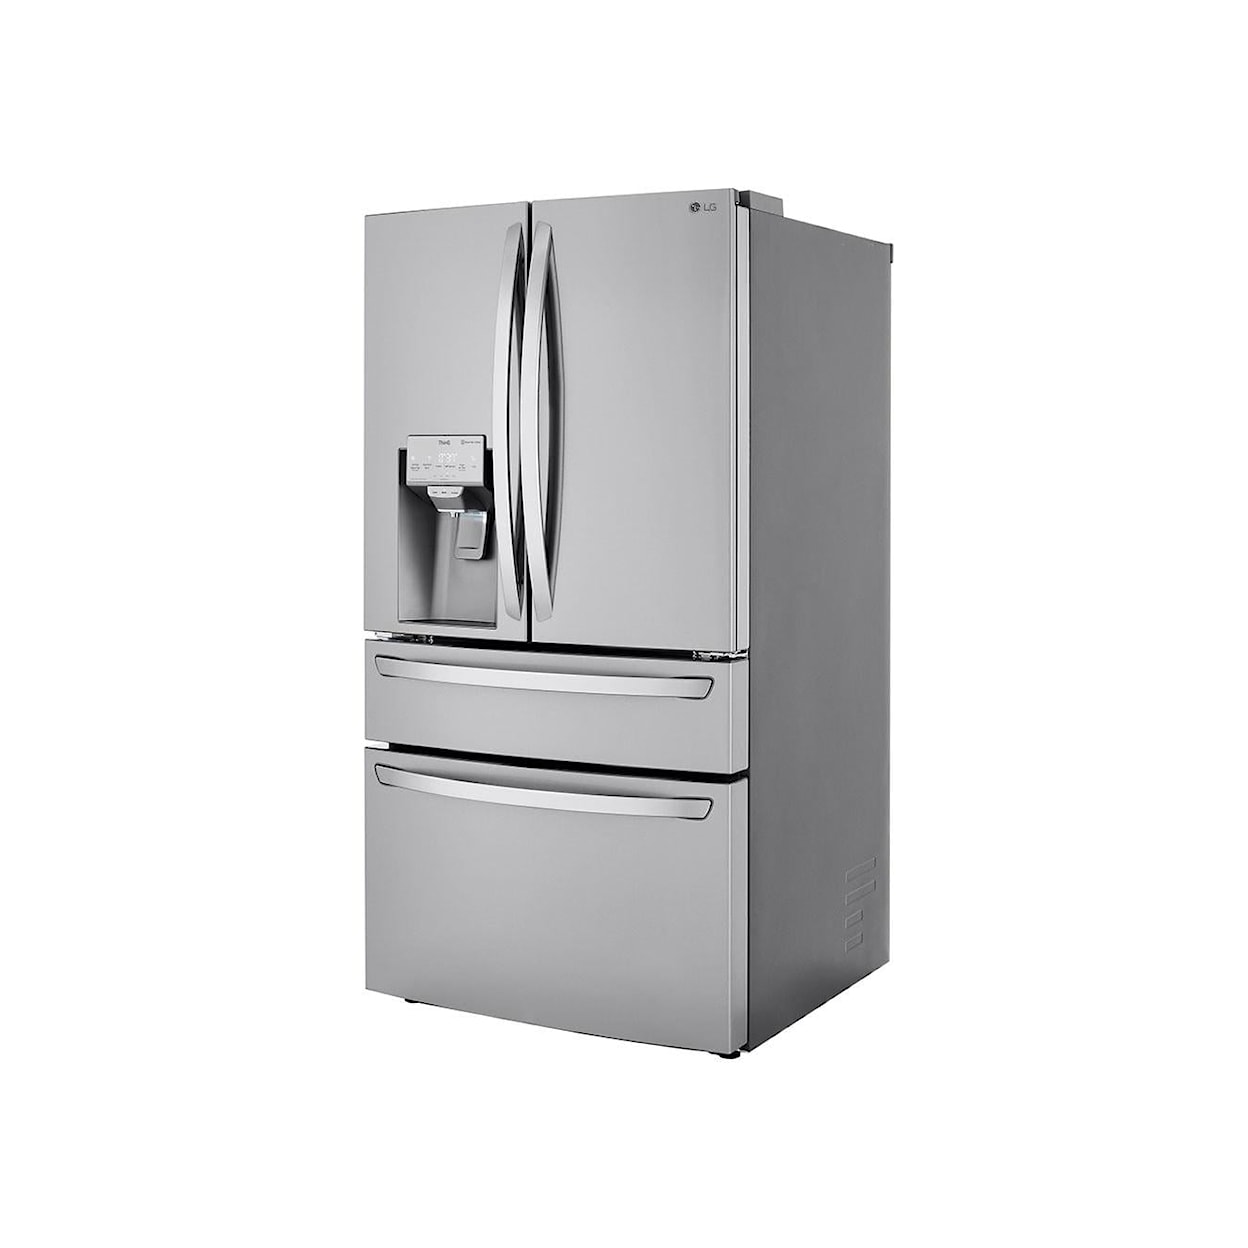 LG Appliances Refrigerators French Door Built In Refrigerator